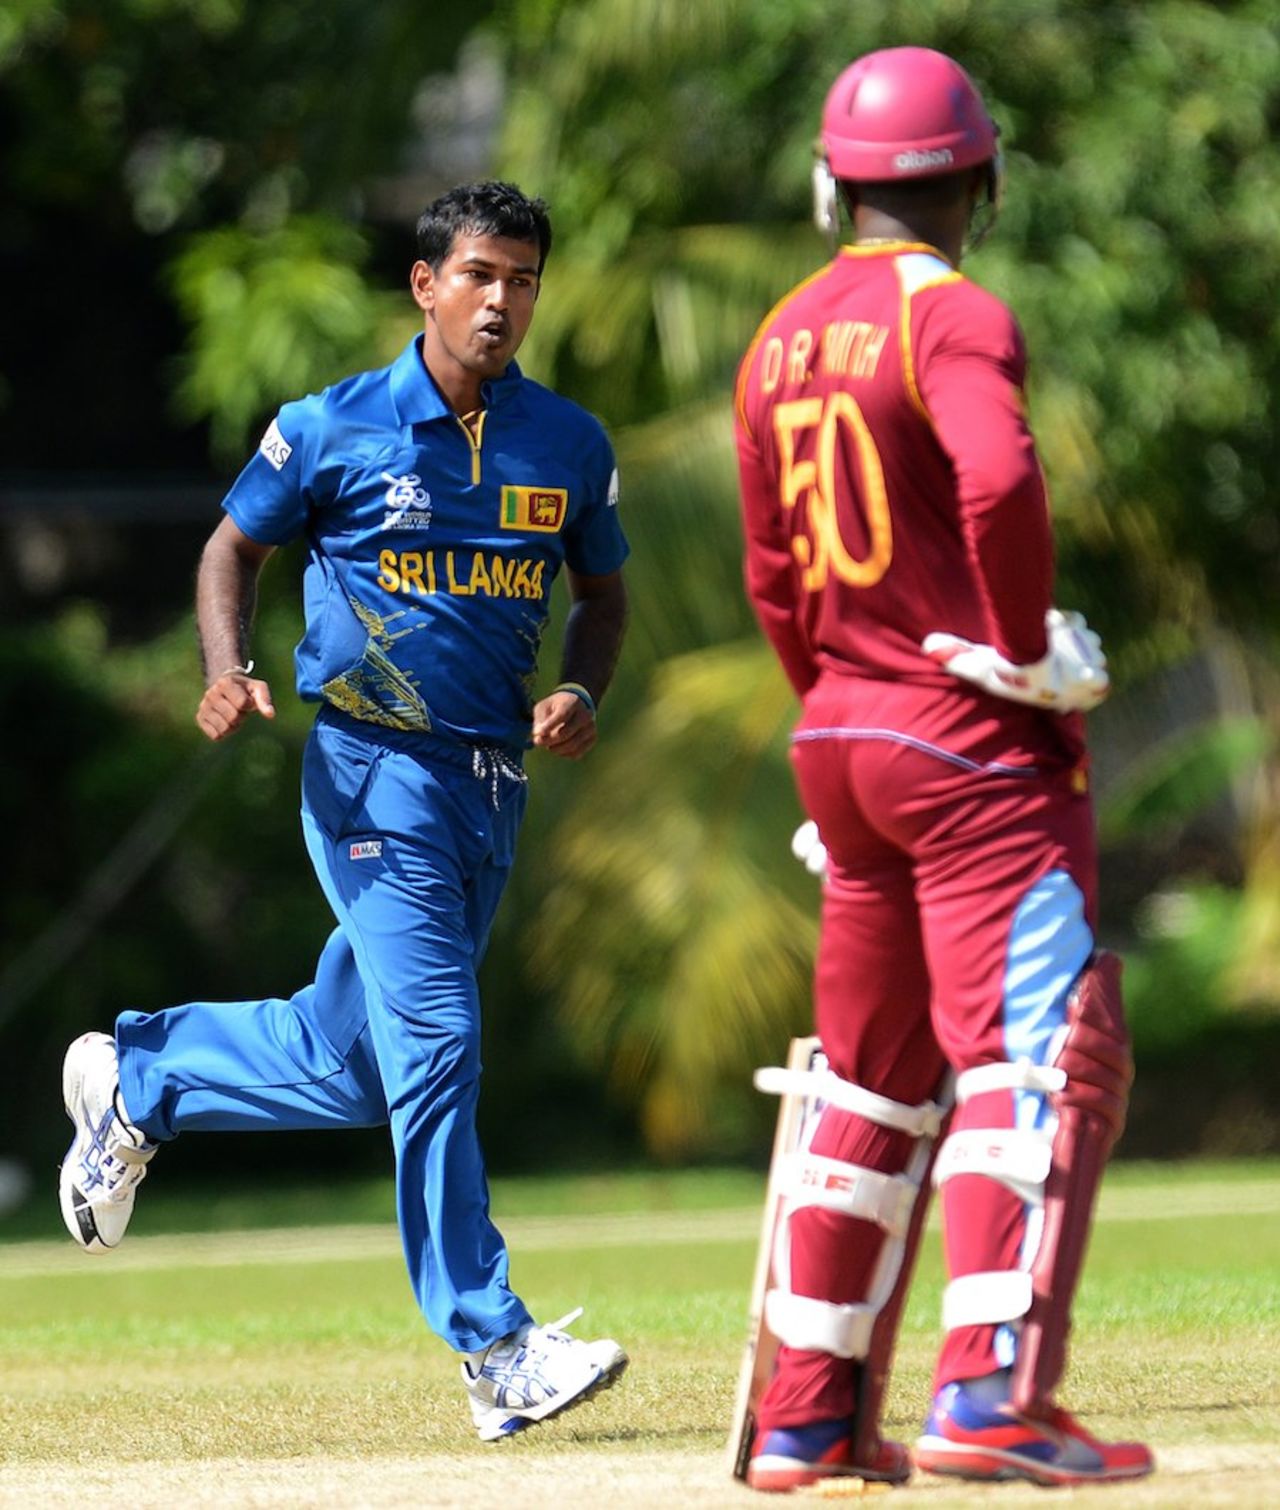 Nuwan Kulasekara dismissed Dwayne Smith for 5, Sri Lanka v West Indies, World Twenty20 2012 warm-up, Colombo, September 13, 2012